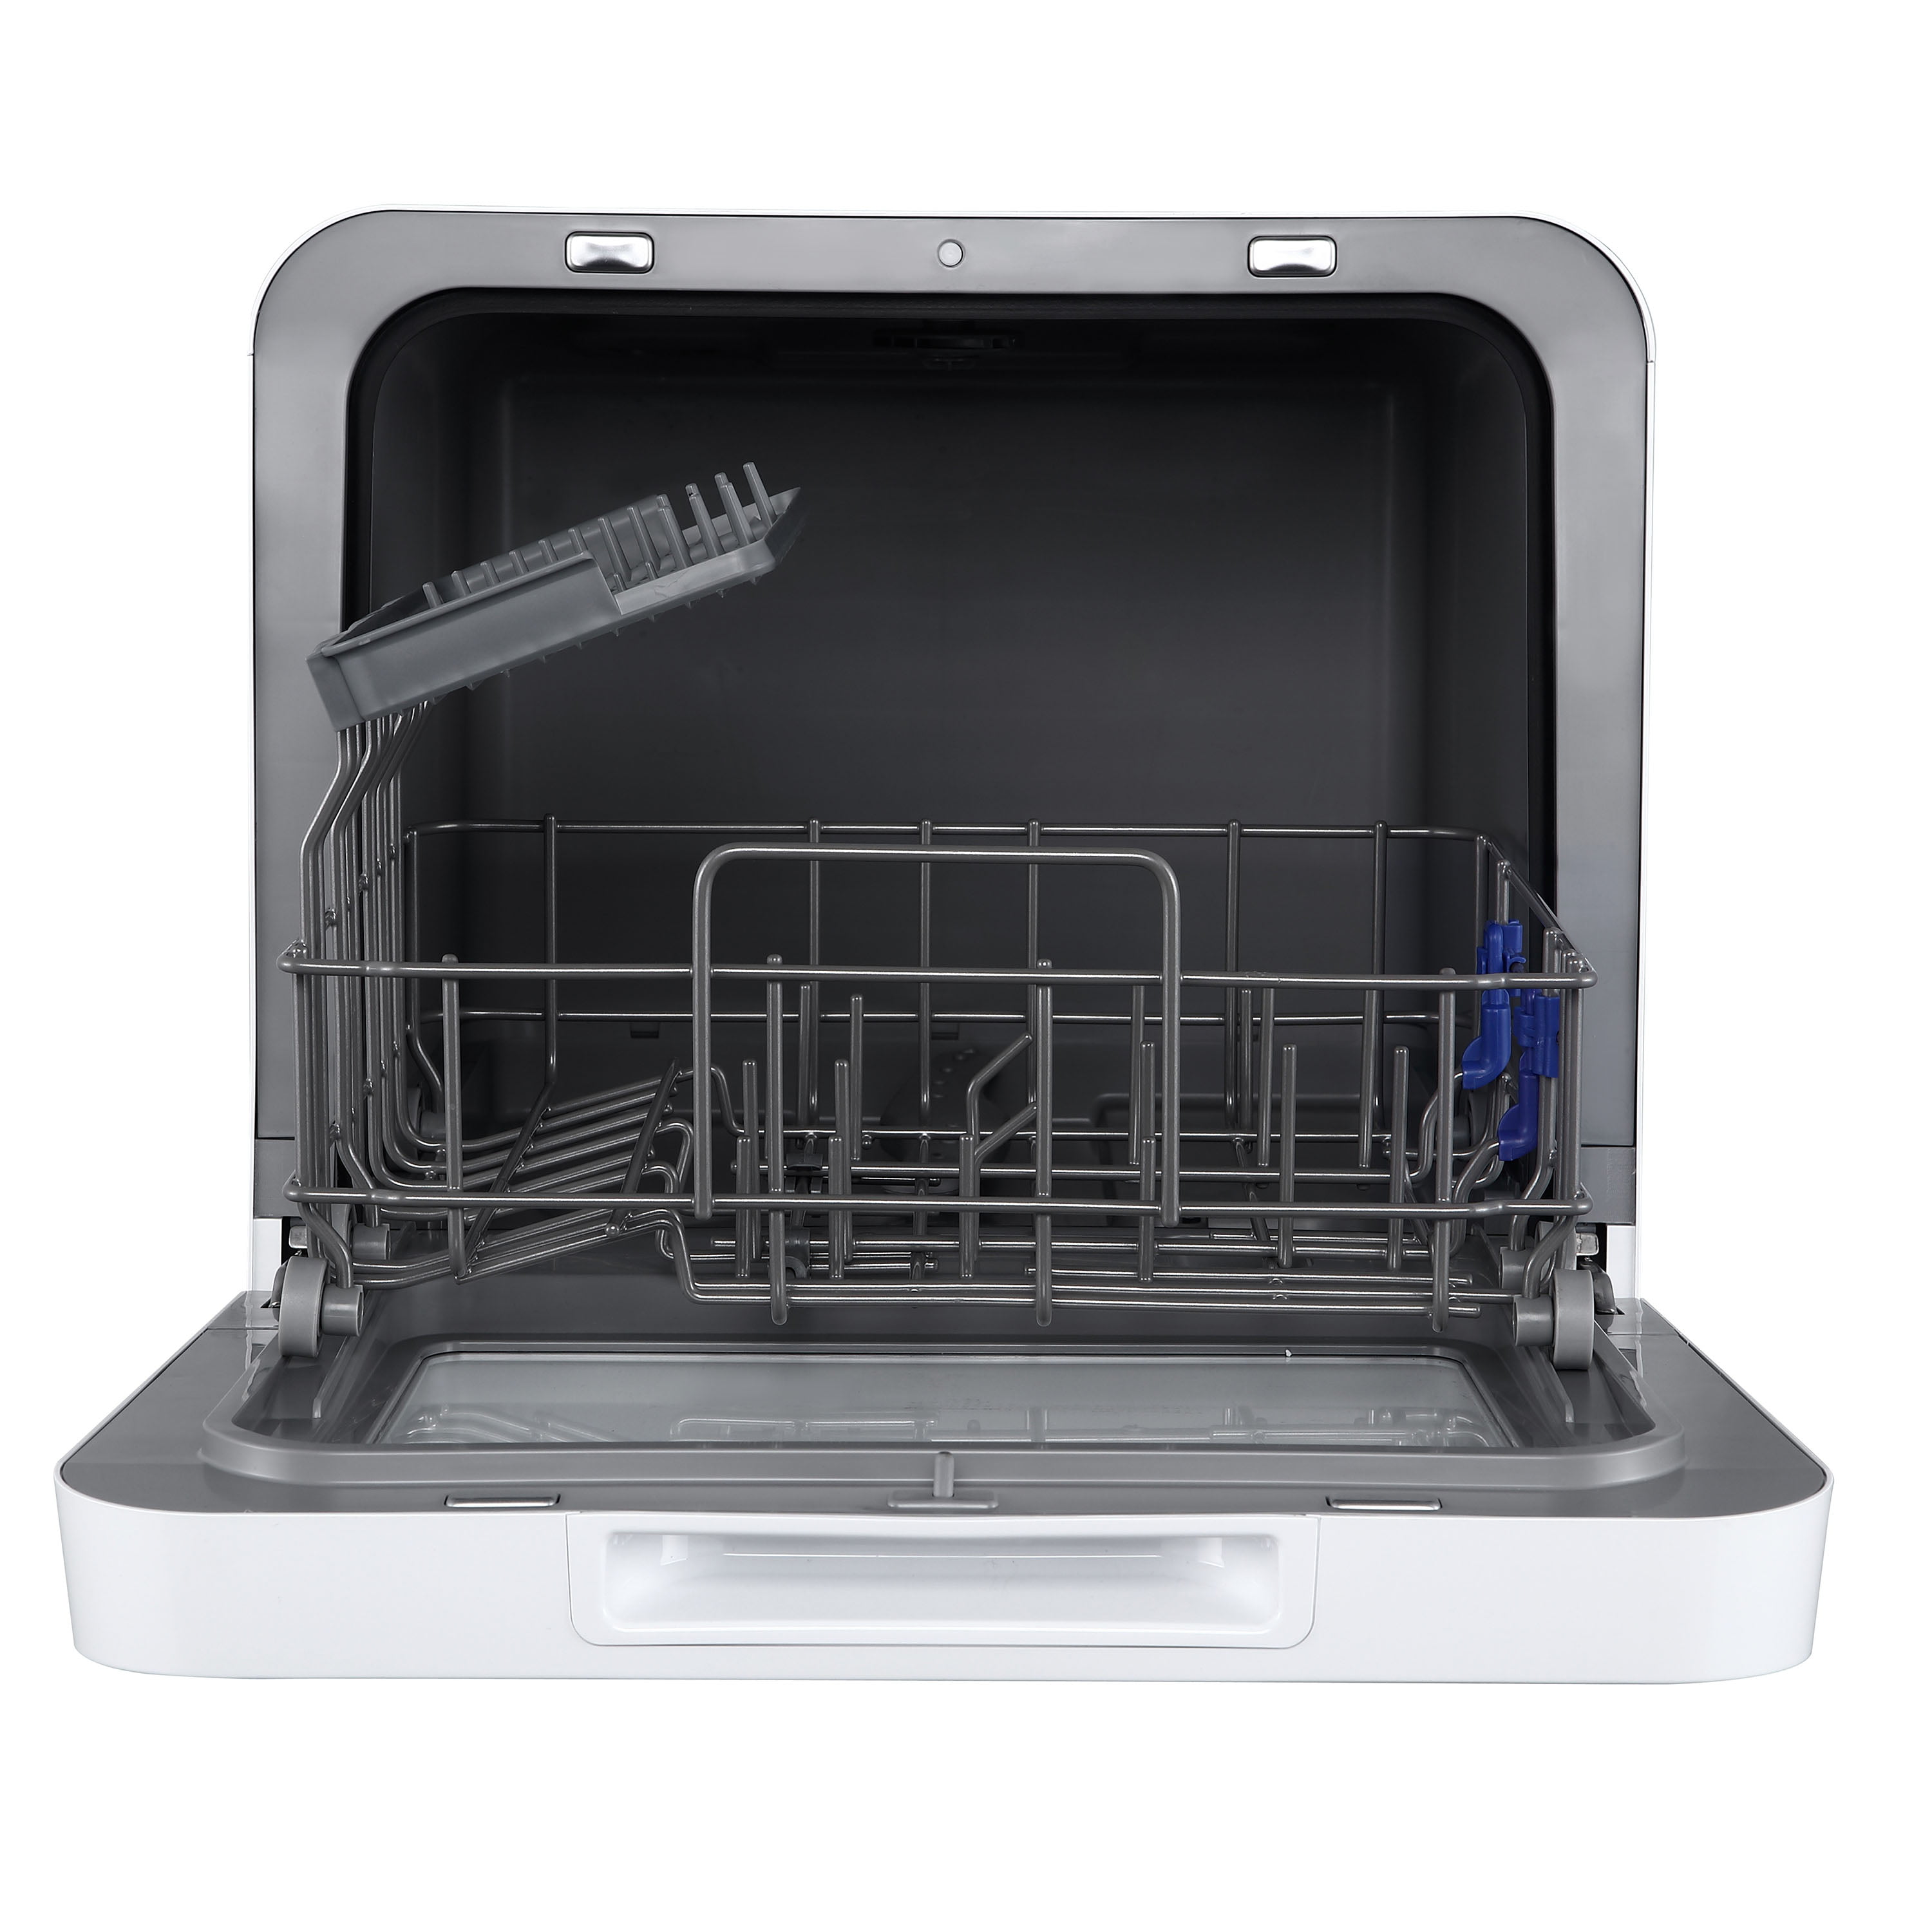 Farberware FDW05WHA Dishwasher, Black in 2023  Farberware, Countertop  dishwasher, Dishwasher